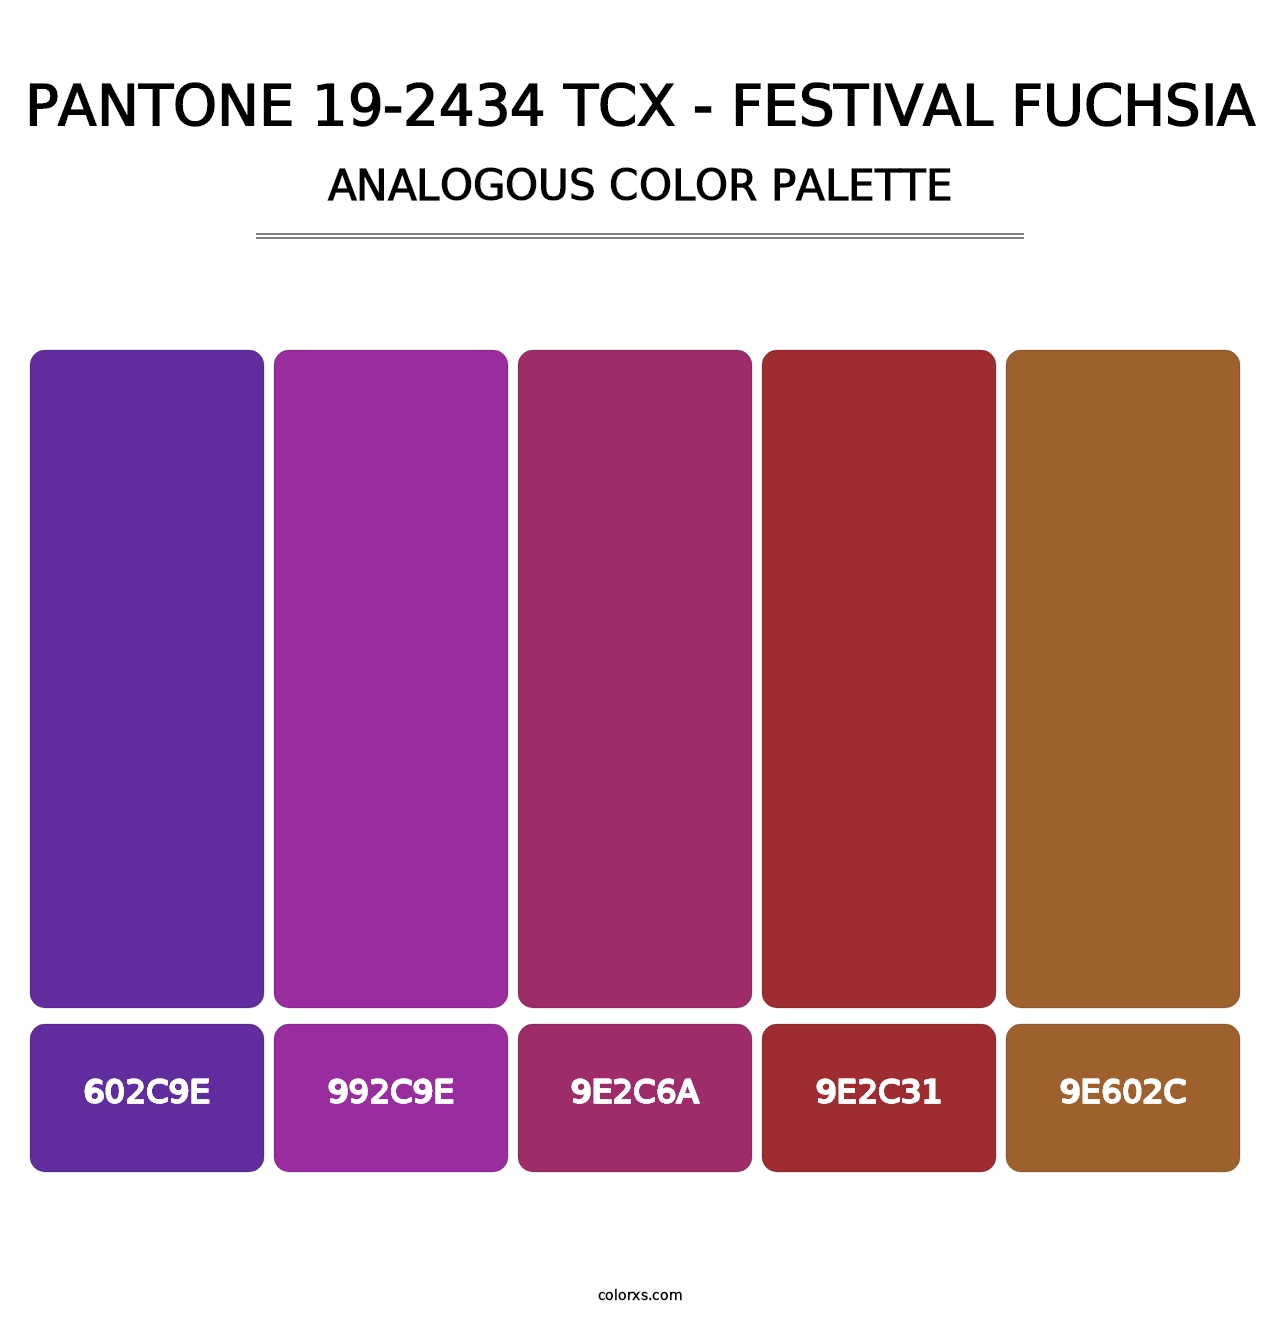 PANTONE 19-2434 TCX - Festival Fuchsia - Analogous Color Palette